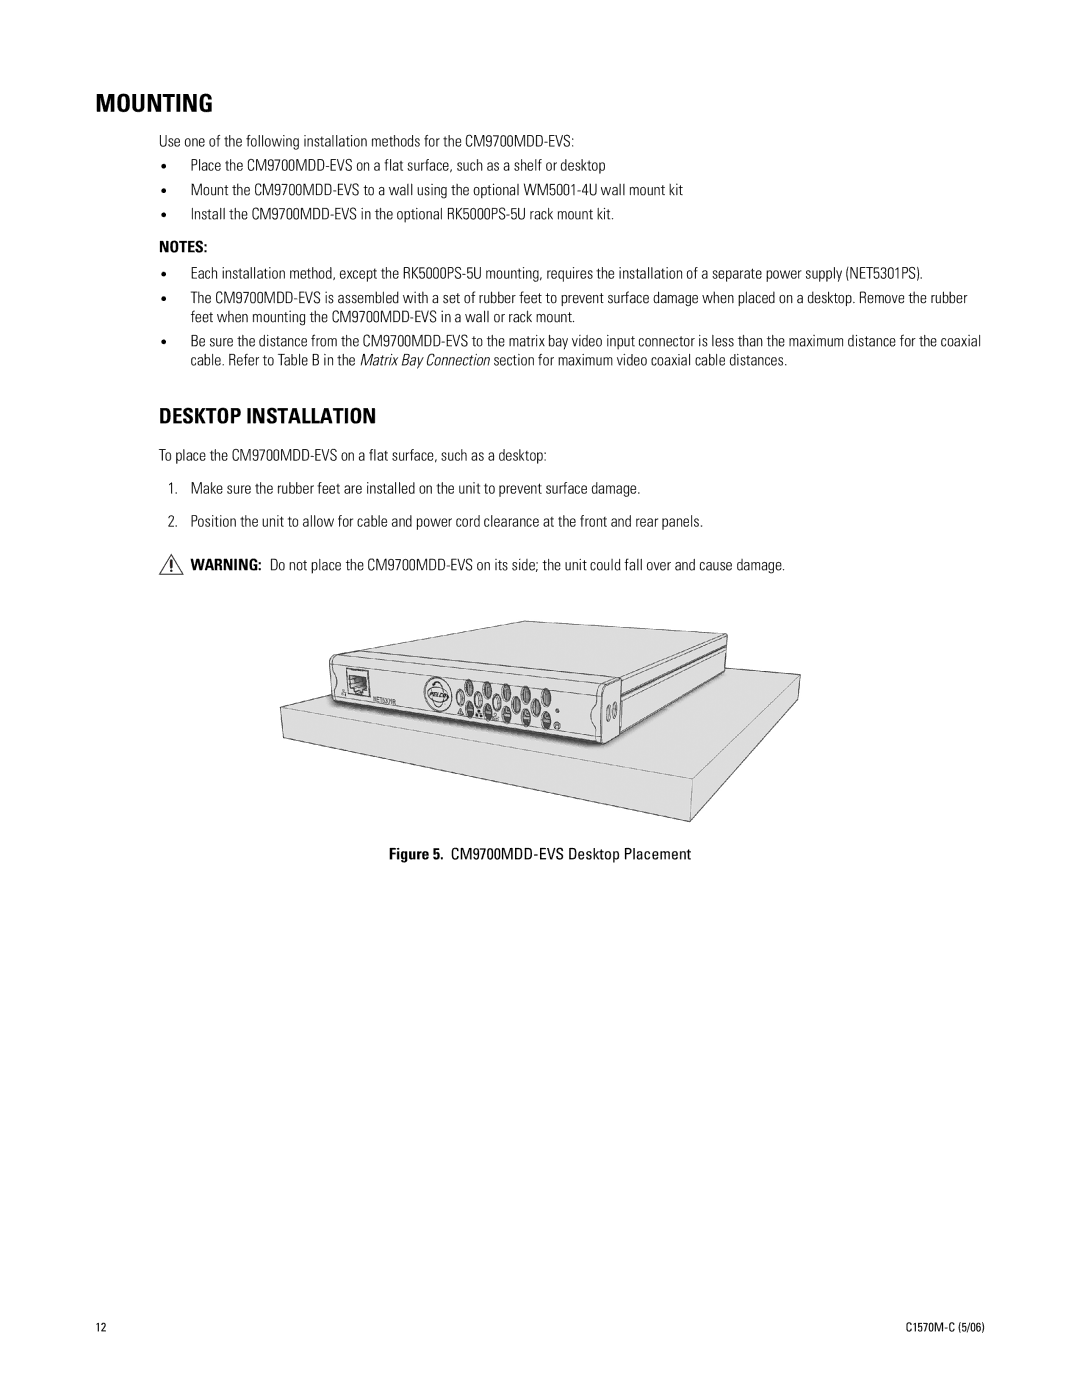 Pelco CM9700MDD-EVS manual Mounting, Desktop Installation 